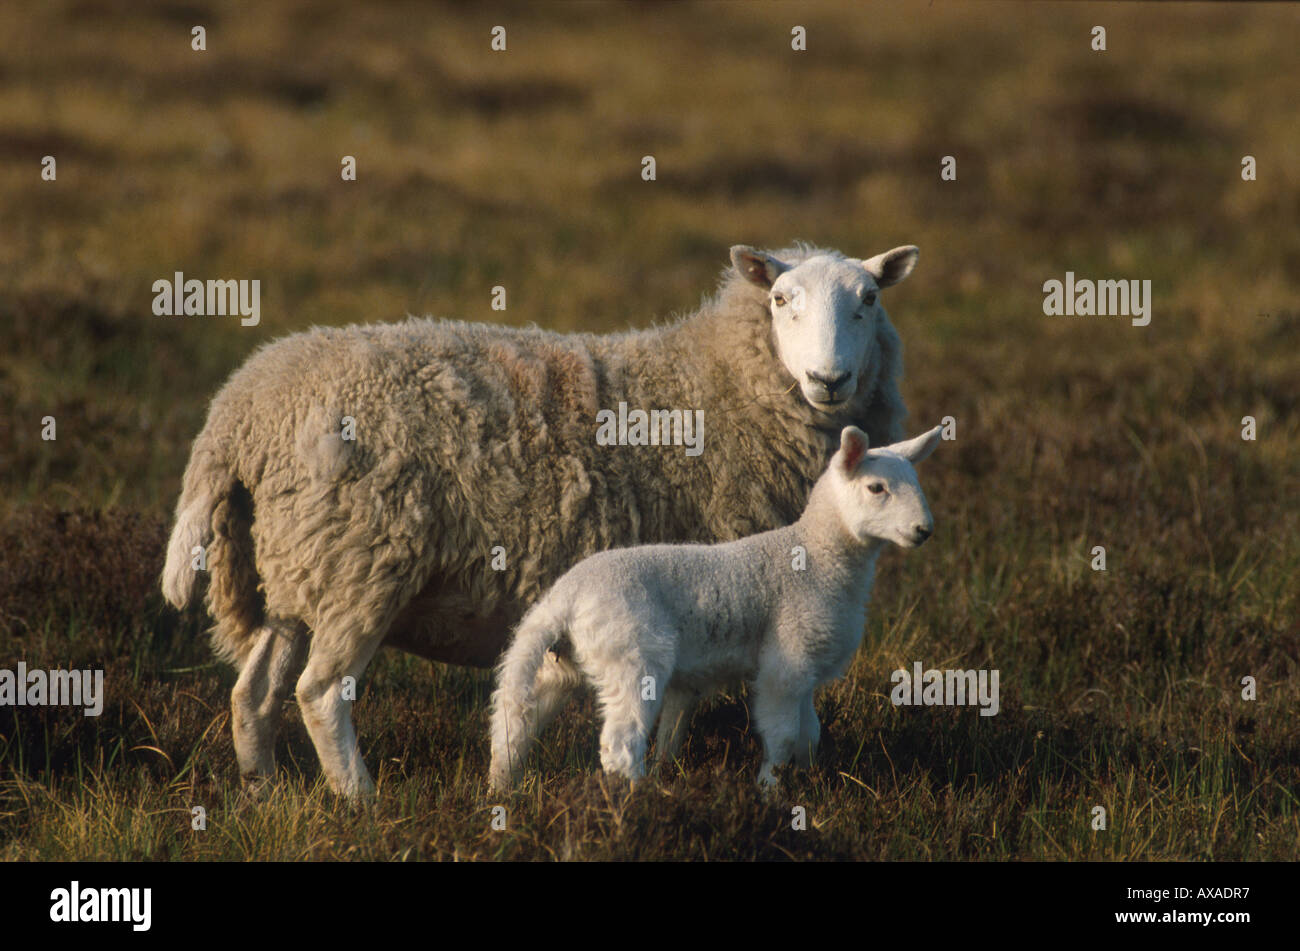 Scottish sheep with lamb, Scotland, Great Britain Stock Photo